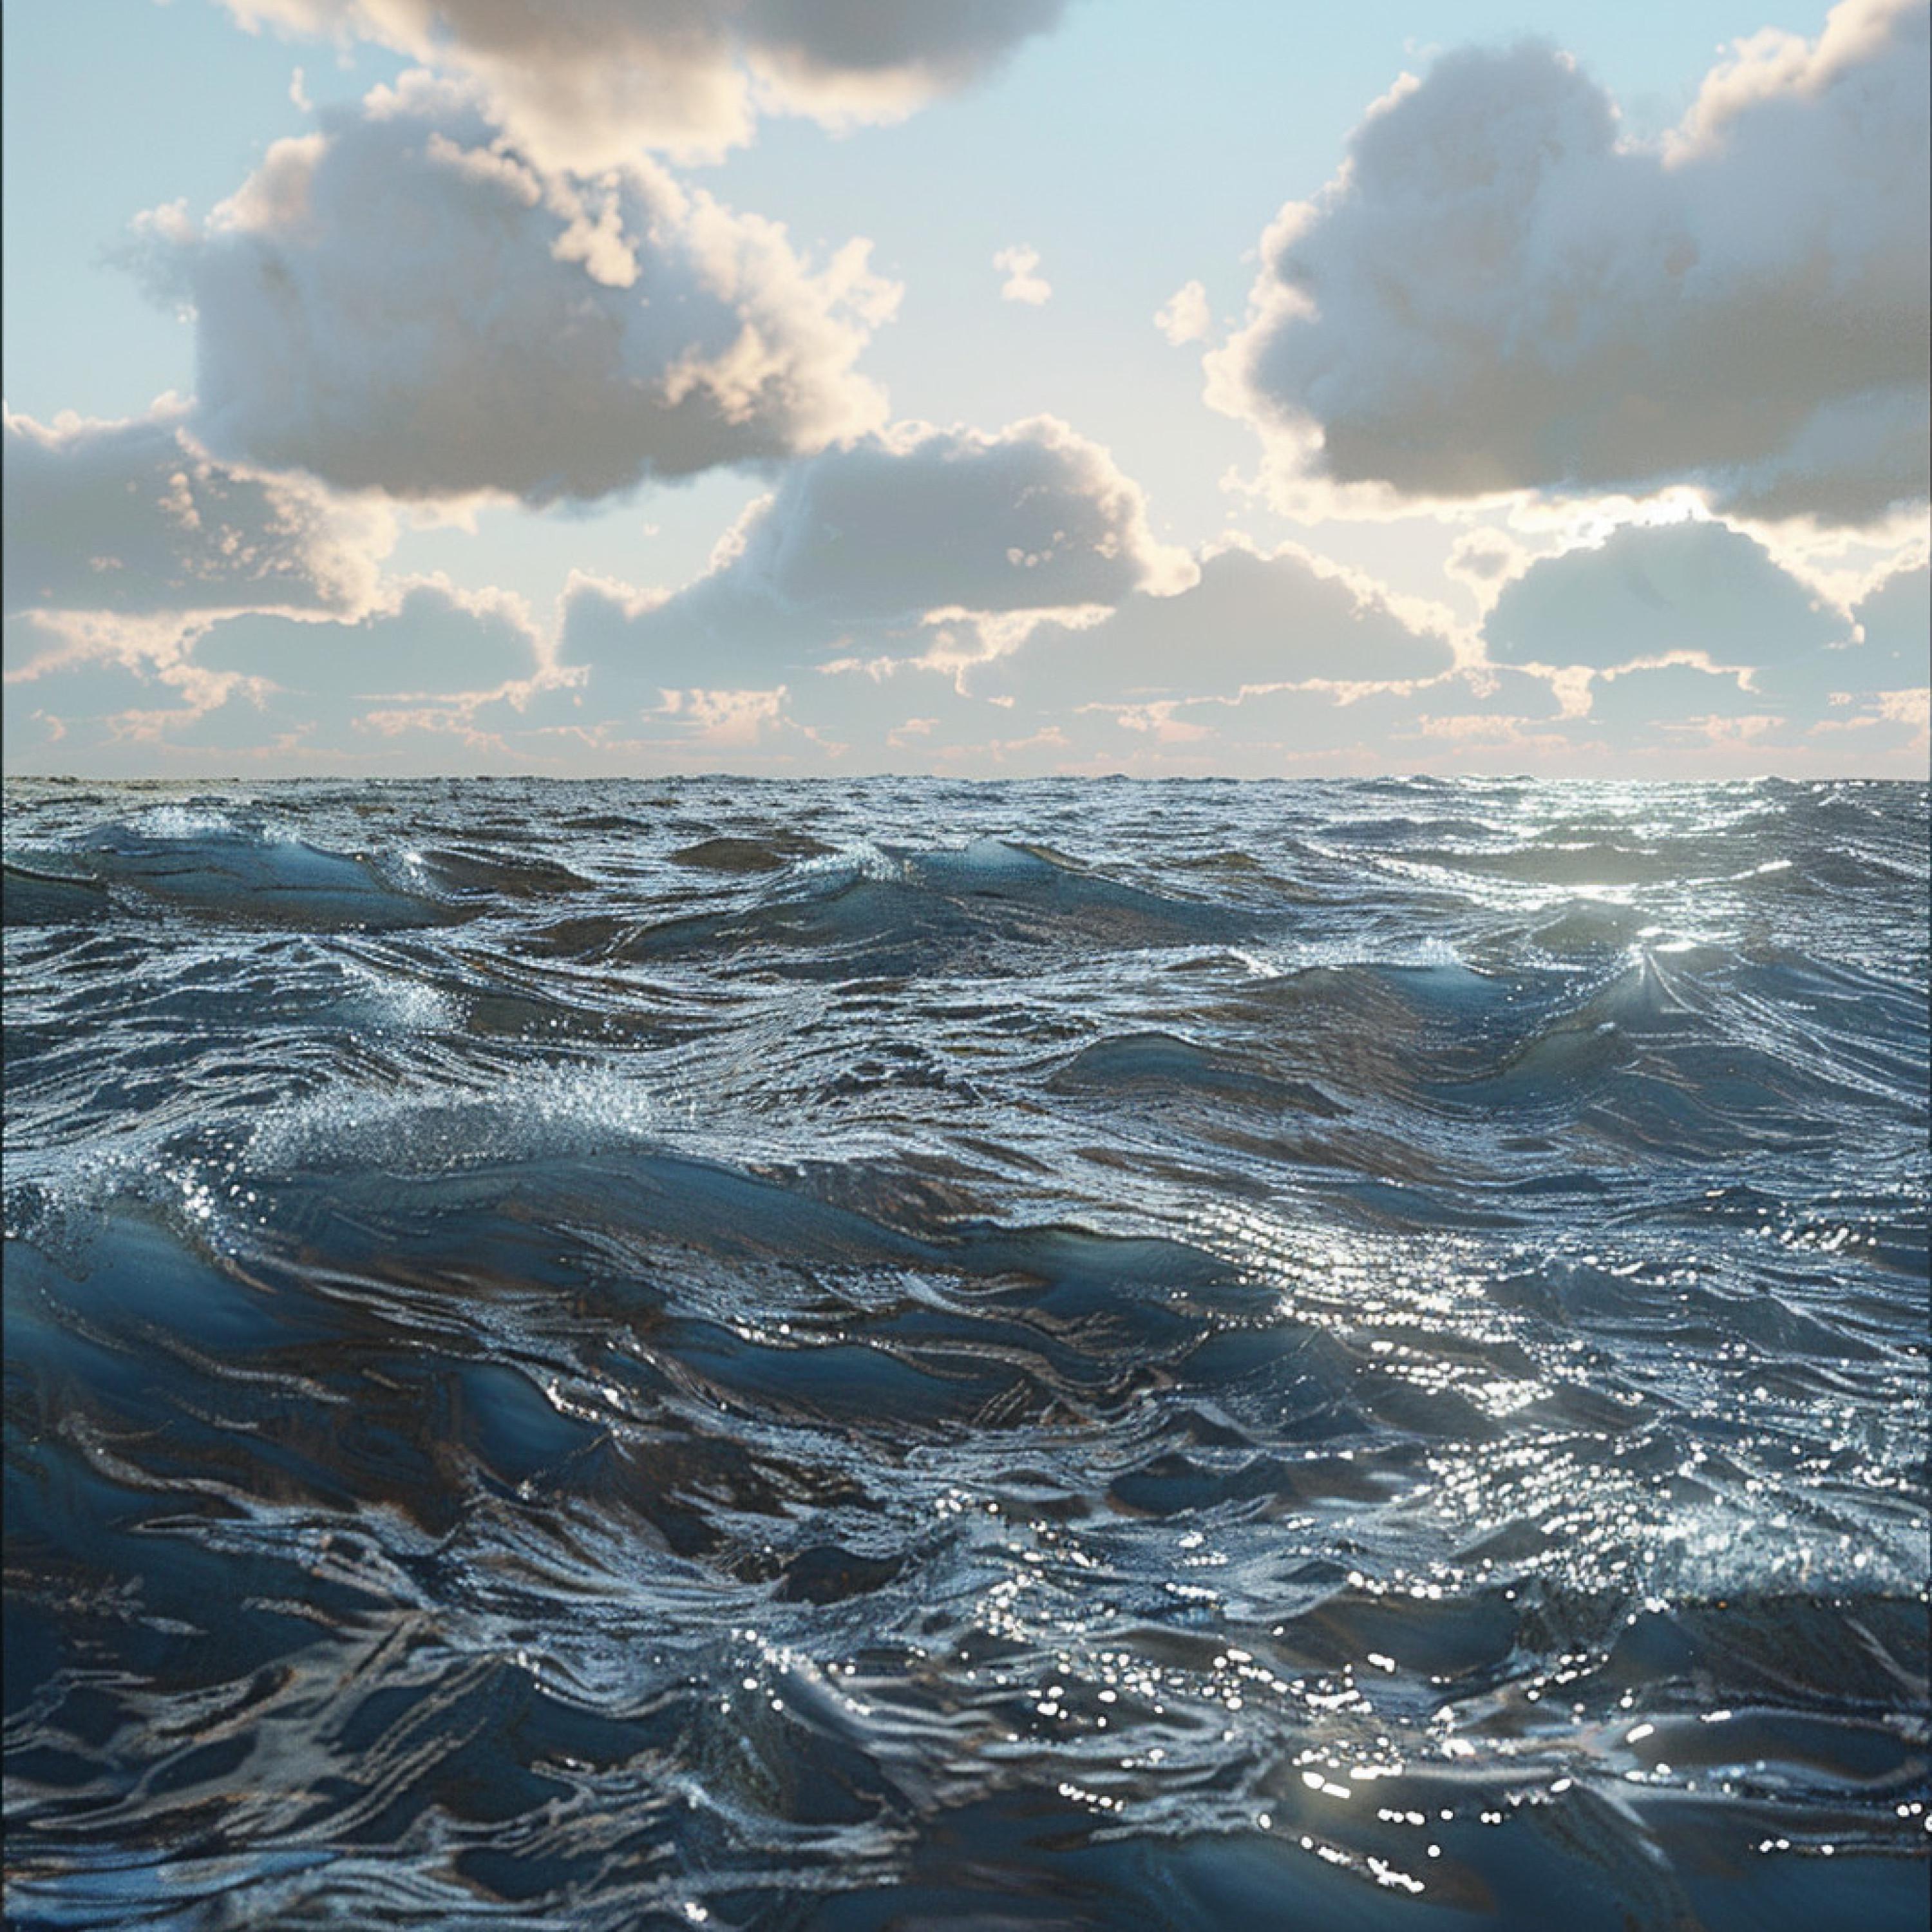 Selectrodynamic - Reflective Ocean Waves for Calm